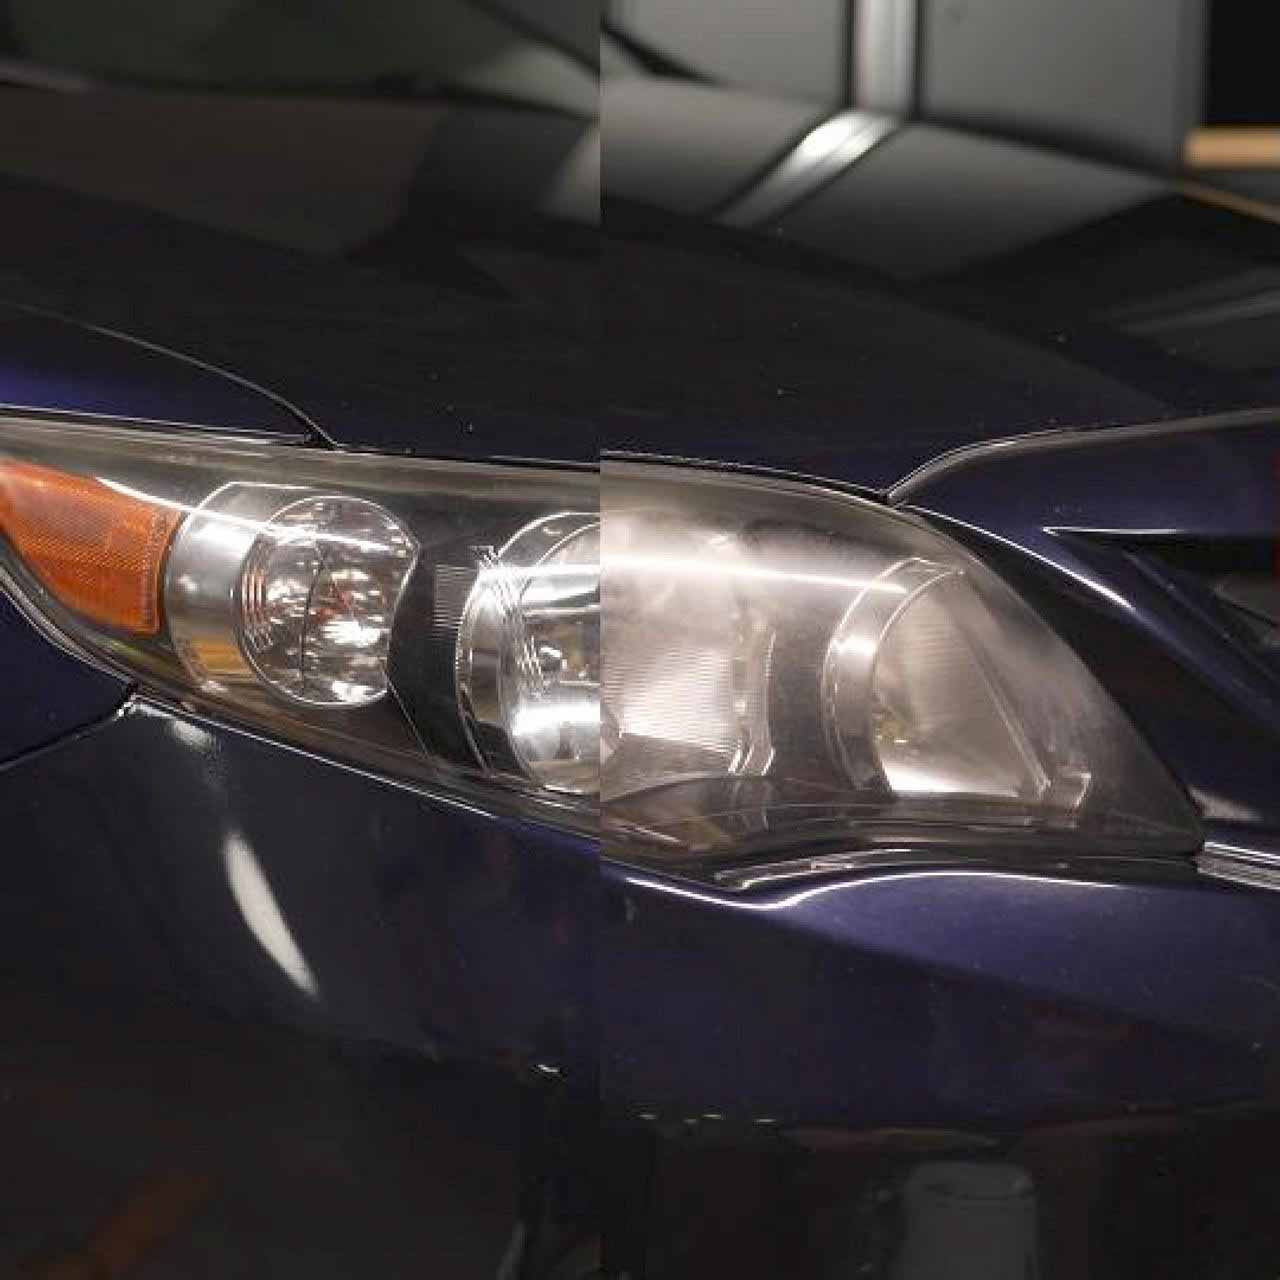 Rust-Oleum Wipe New Headlight Restore - Shop Automotive Cleaners at H-E-B